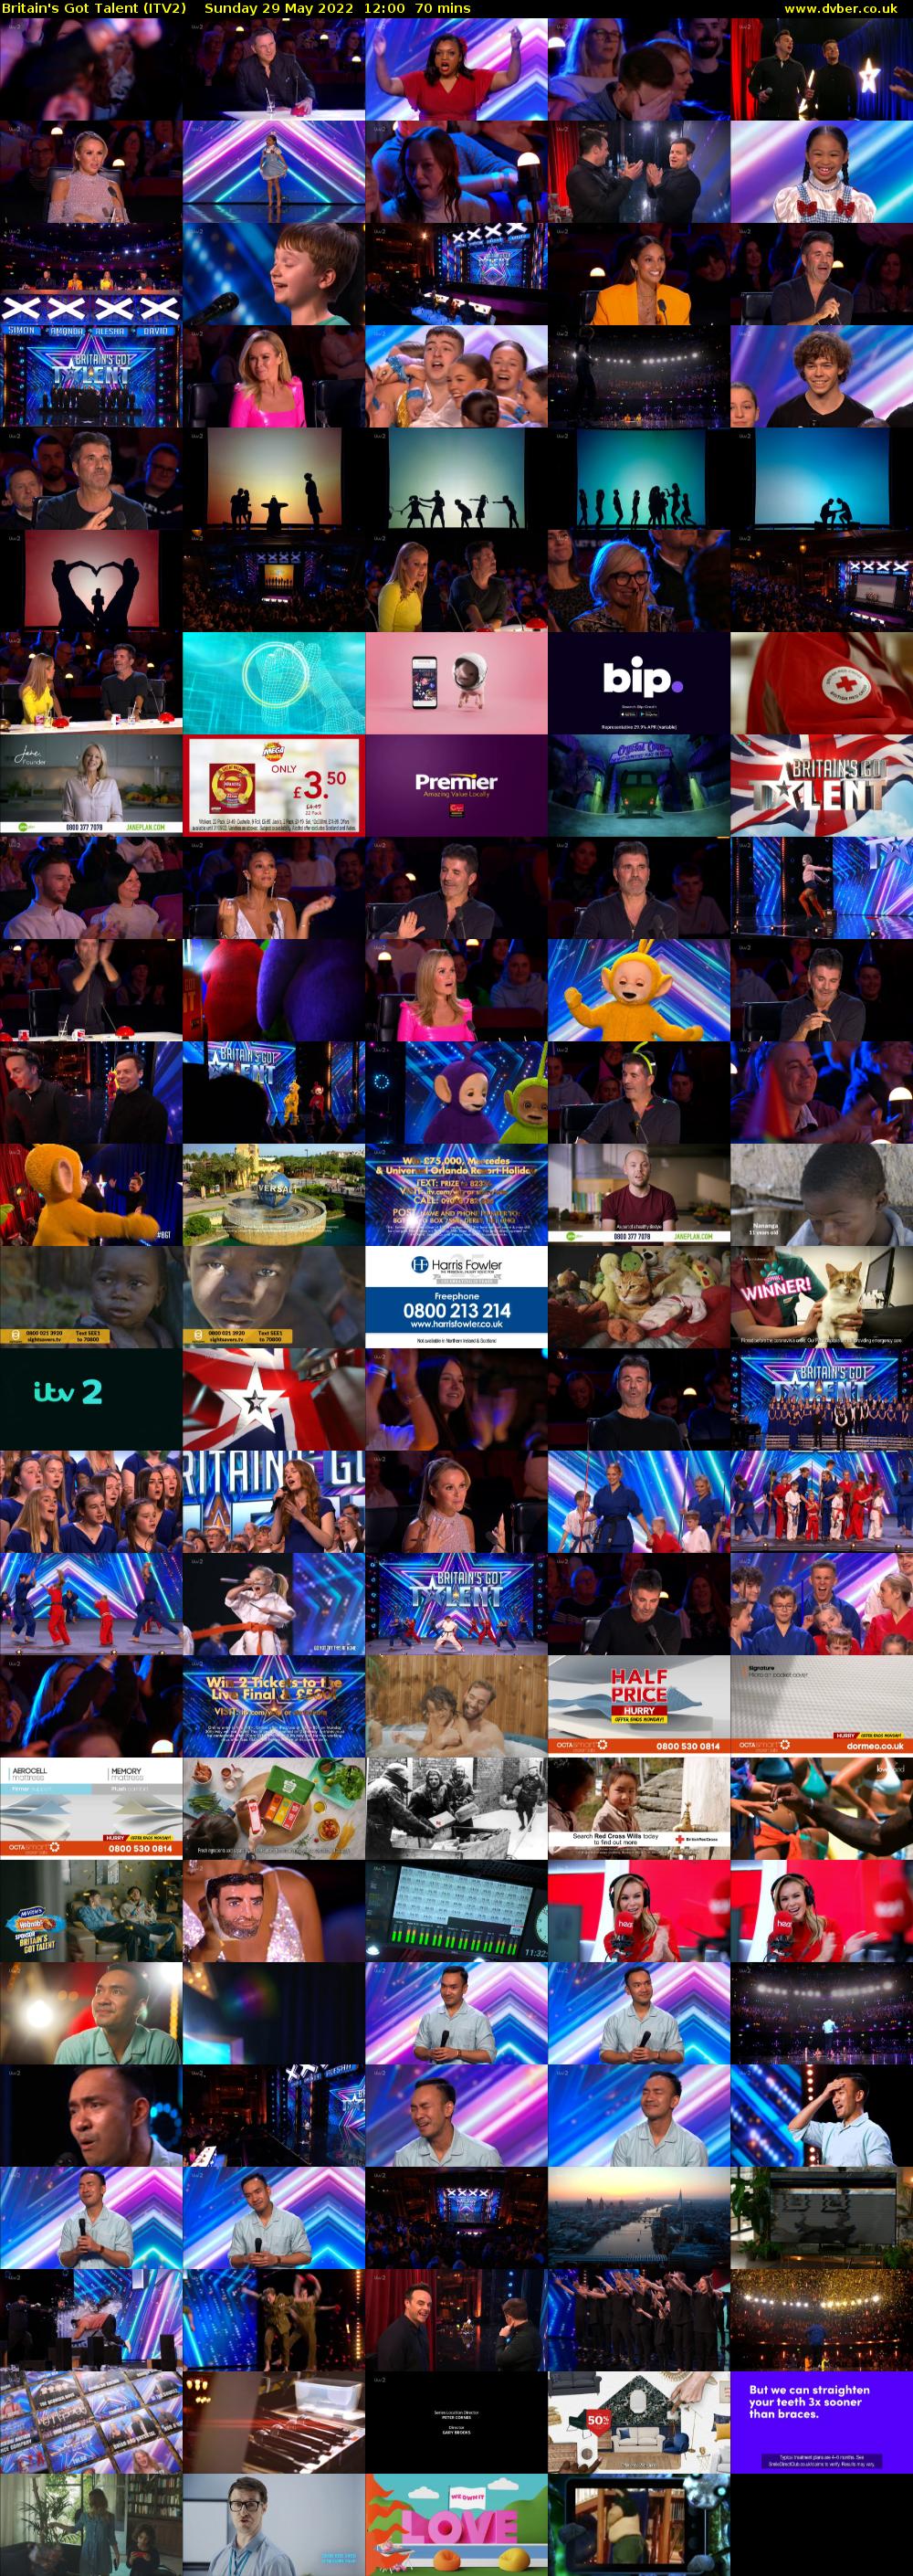 Britain's Got Talent (ITV2) Sunday 29 May 2022 12:00 - 13:10